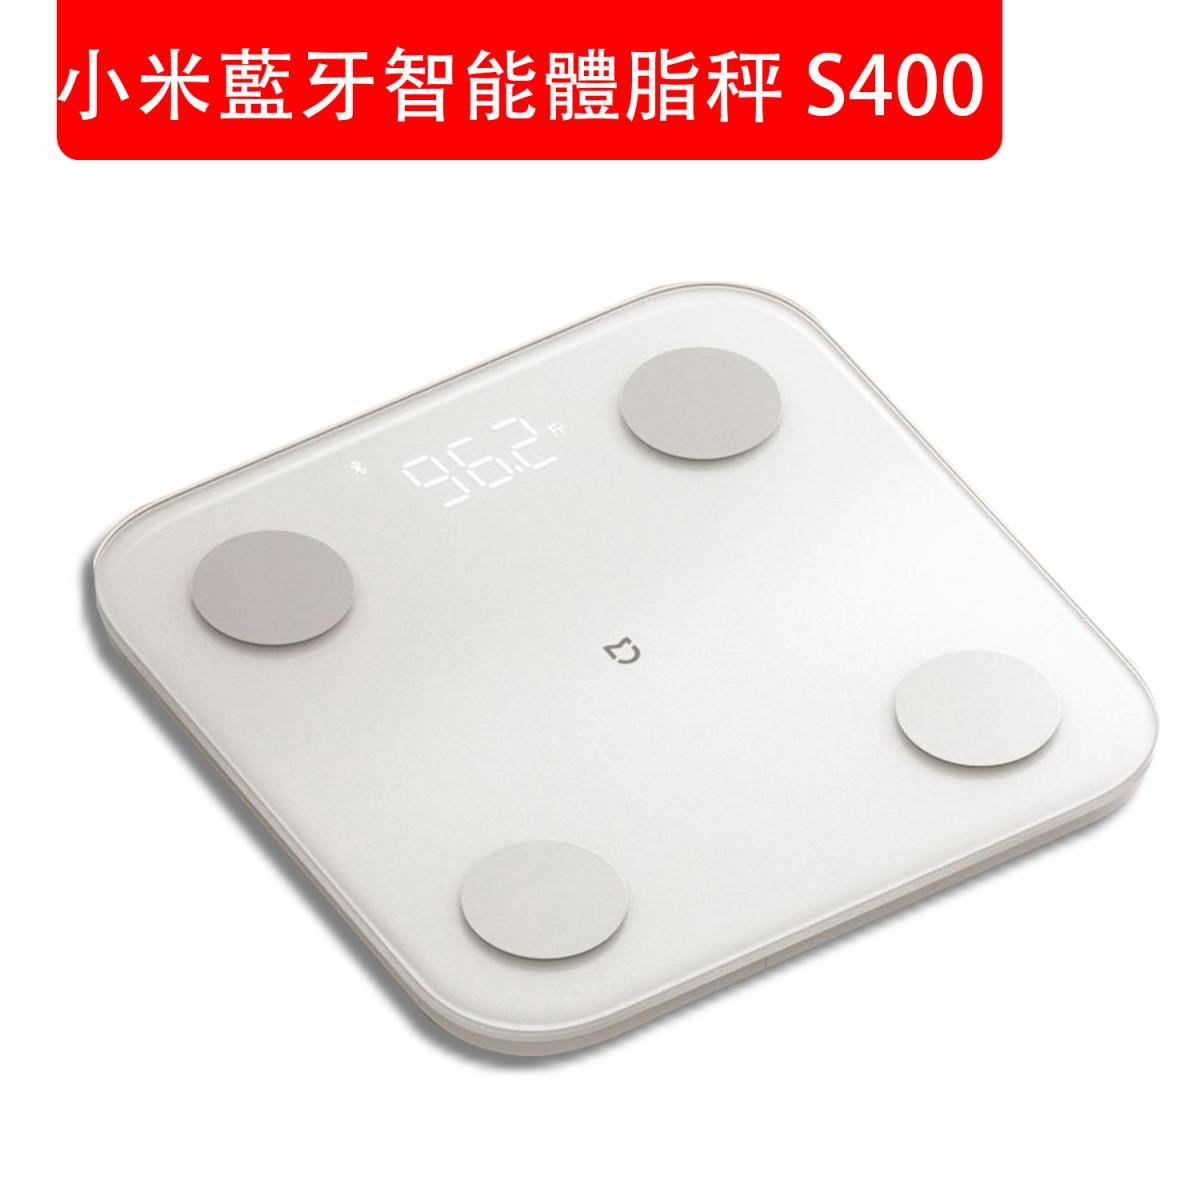 Xiaomi Bluetooth Smart Body Fat Scale S400 Body Fat Meter Body Fat Scale Health Scale Electronic Scale White (Random Packaging)